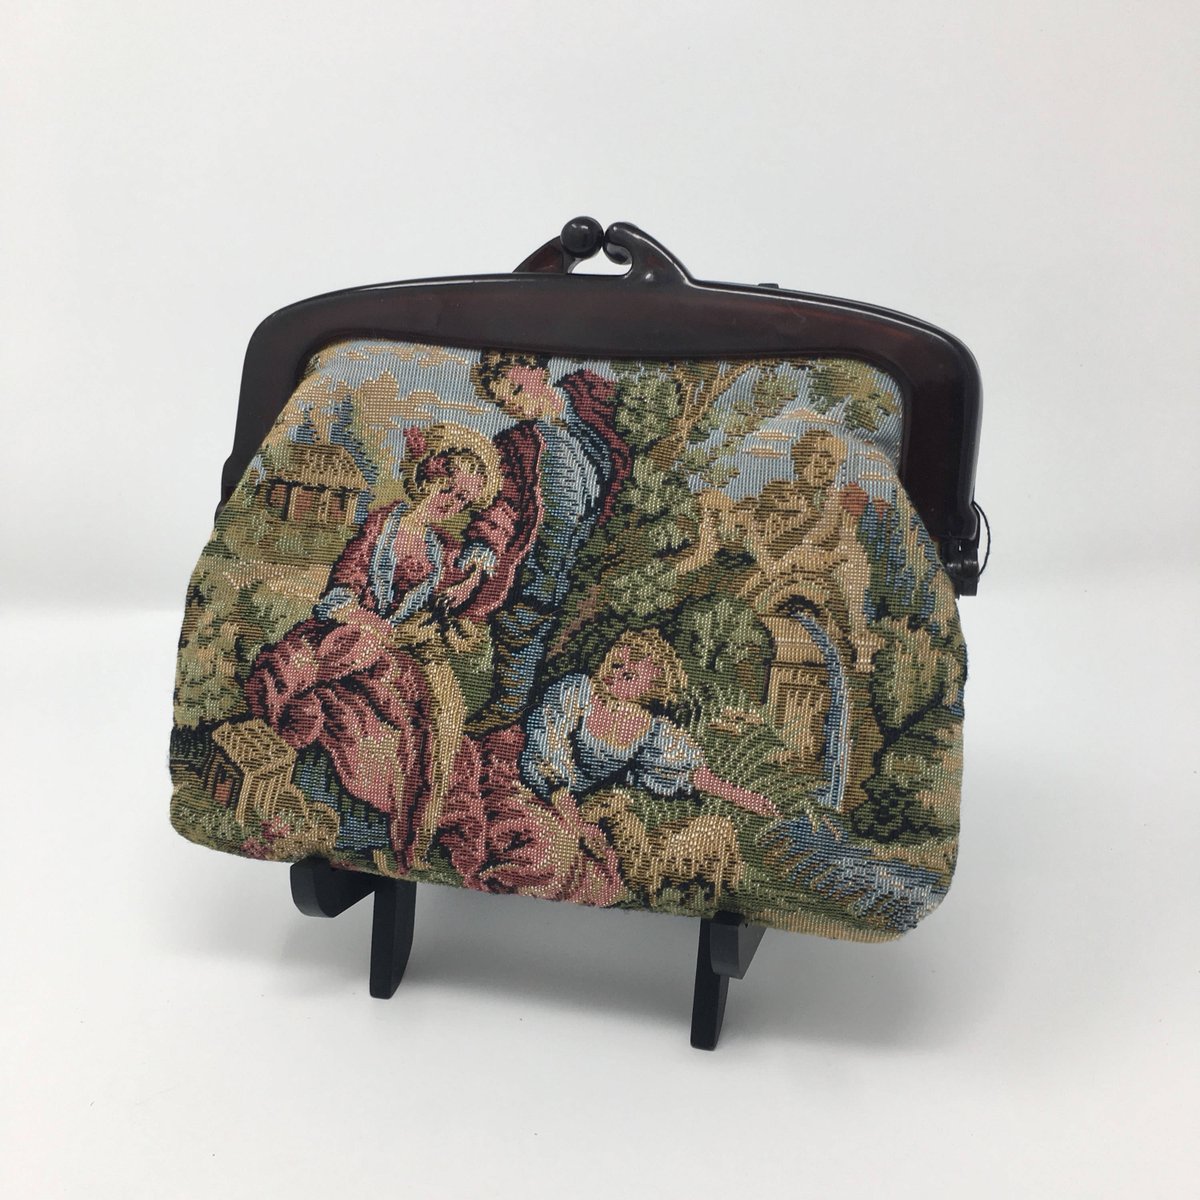 Retro Vintage Tapestry BoHo Bag Purse Clutch Handbag by La Regal LTD etsy.me/2I7UVzC #Jazz #antique #vintage #etsyvintage #mug #FaatEtsyShop #etsyseller #SmallHandbag